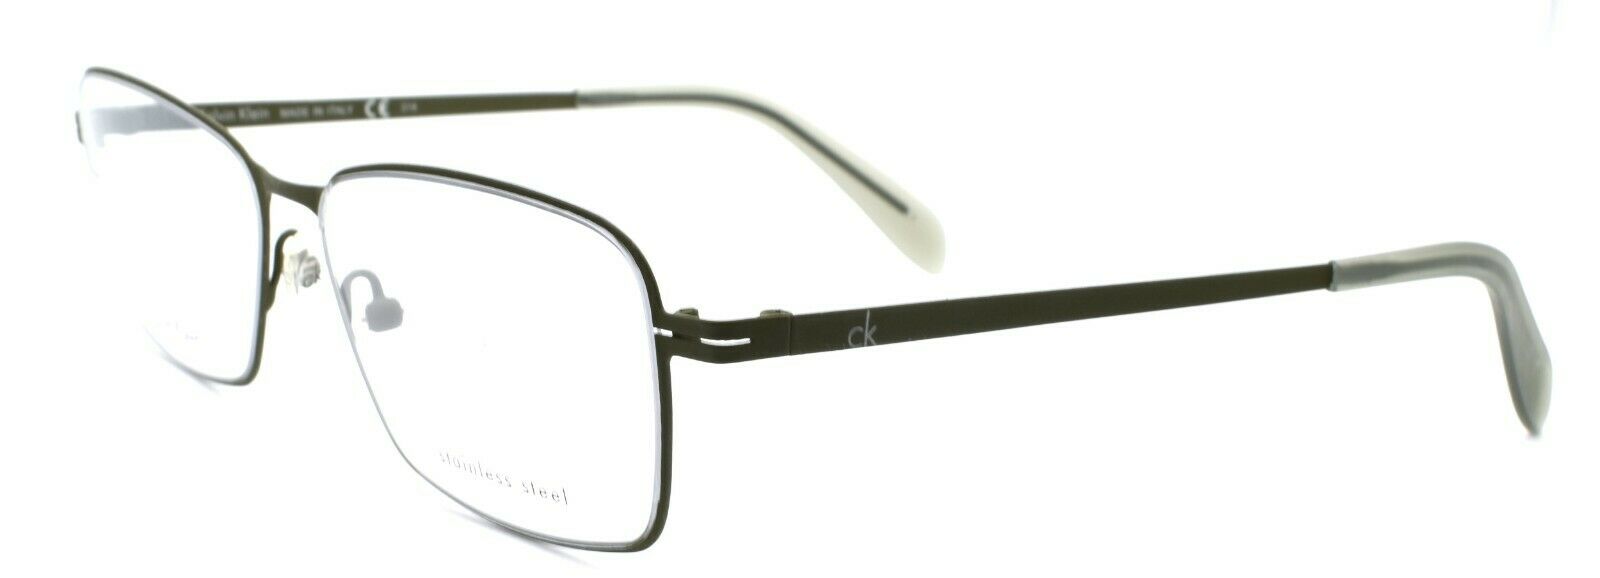 3-Calvin Klein CK5401 317 Men's Eyeglasses Frames 55-16-140 Military Green ITALY-750779068274-IKSpecs